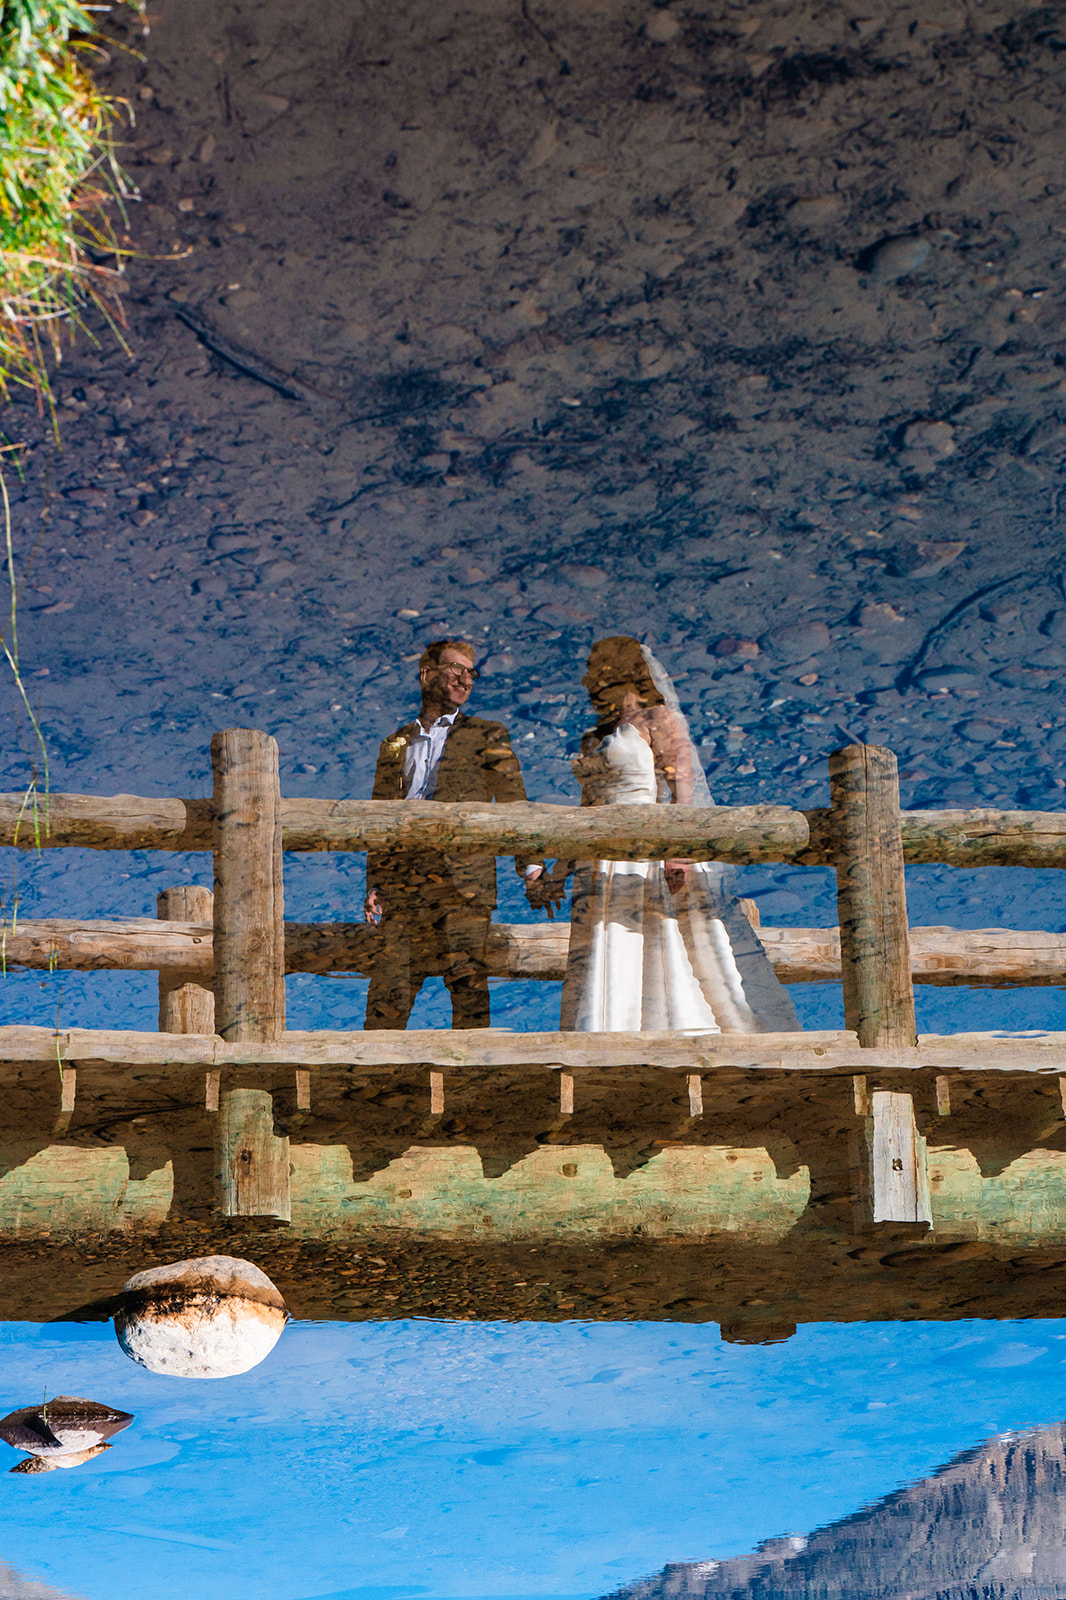 Bride and groom walking across a bridge in Banff, Alberta